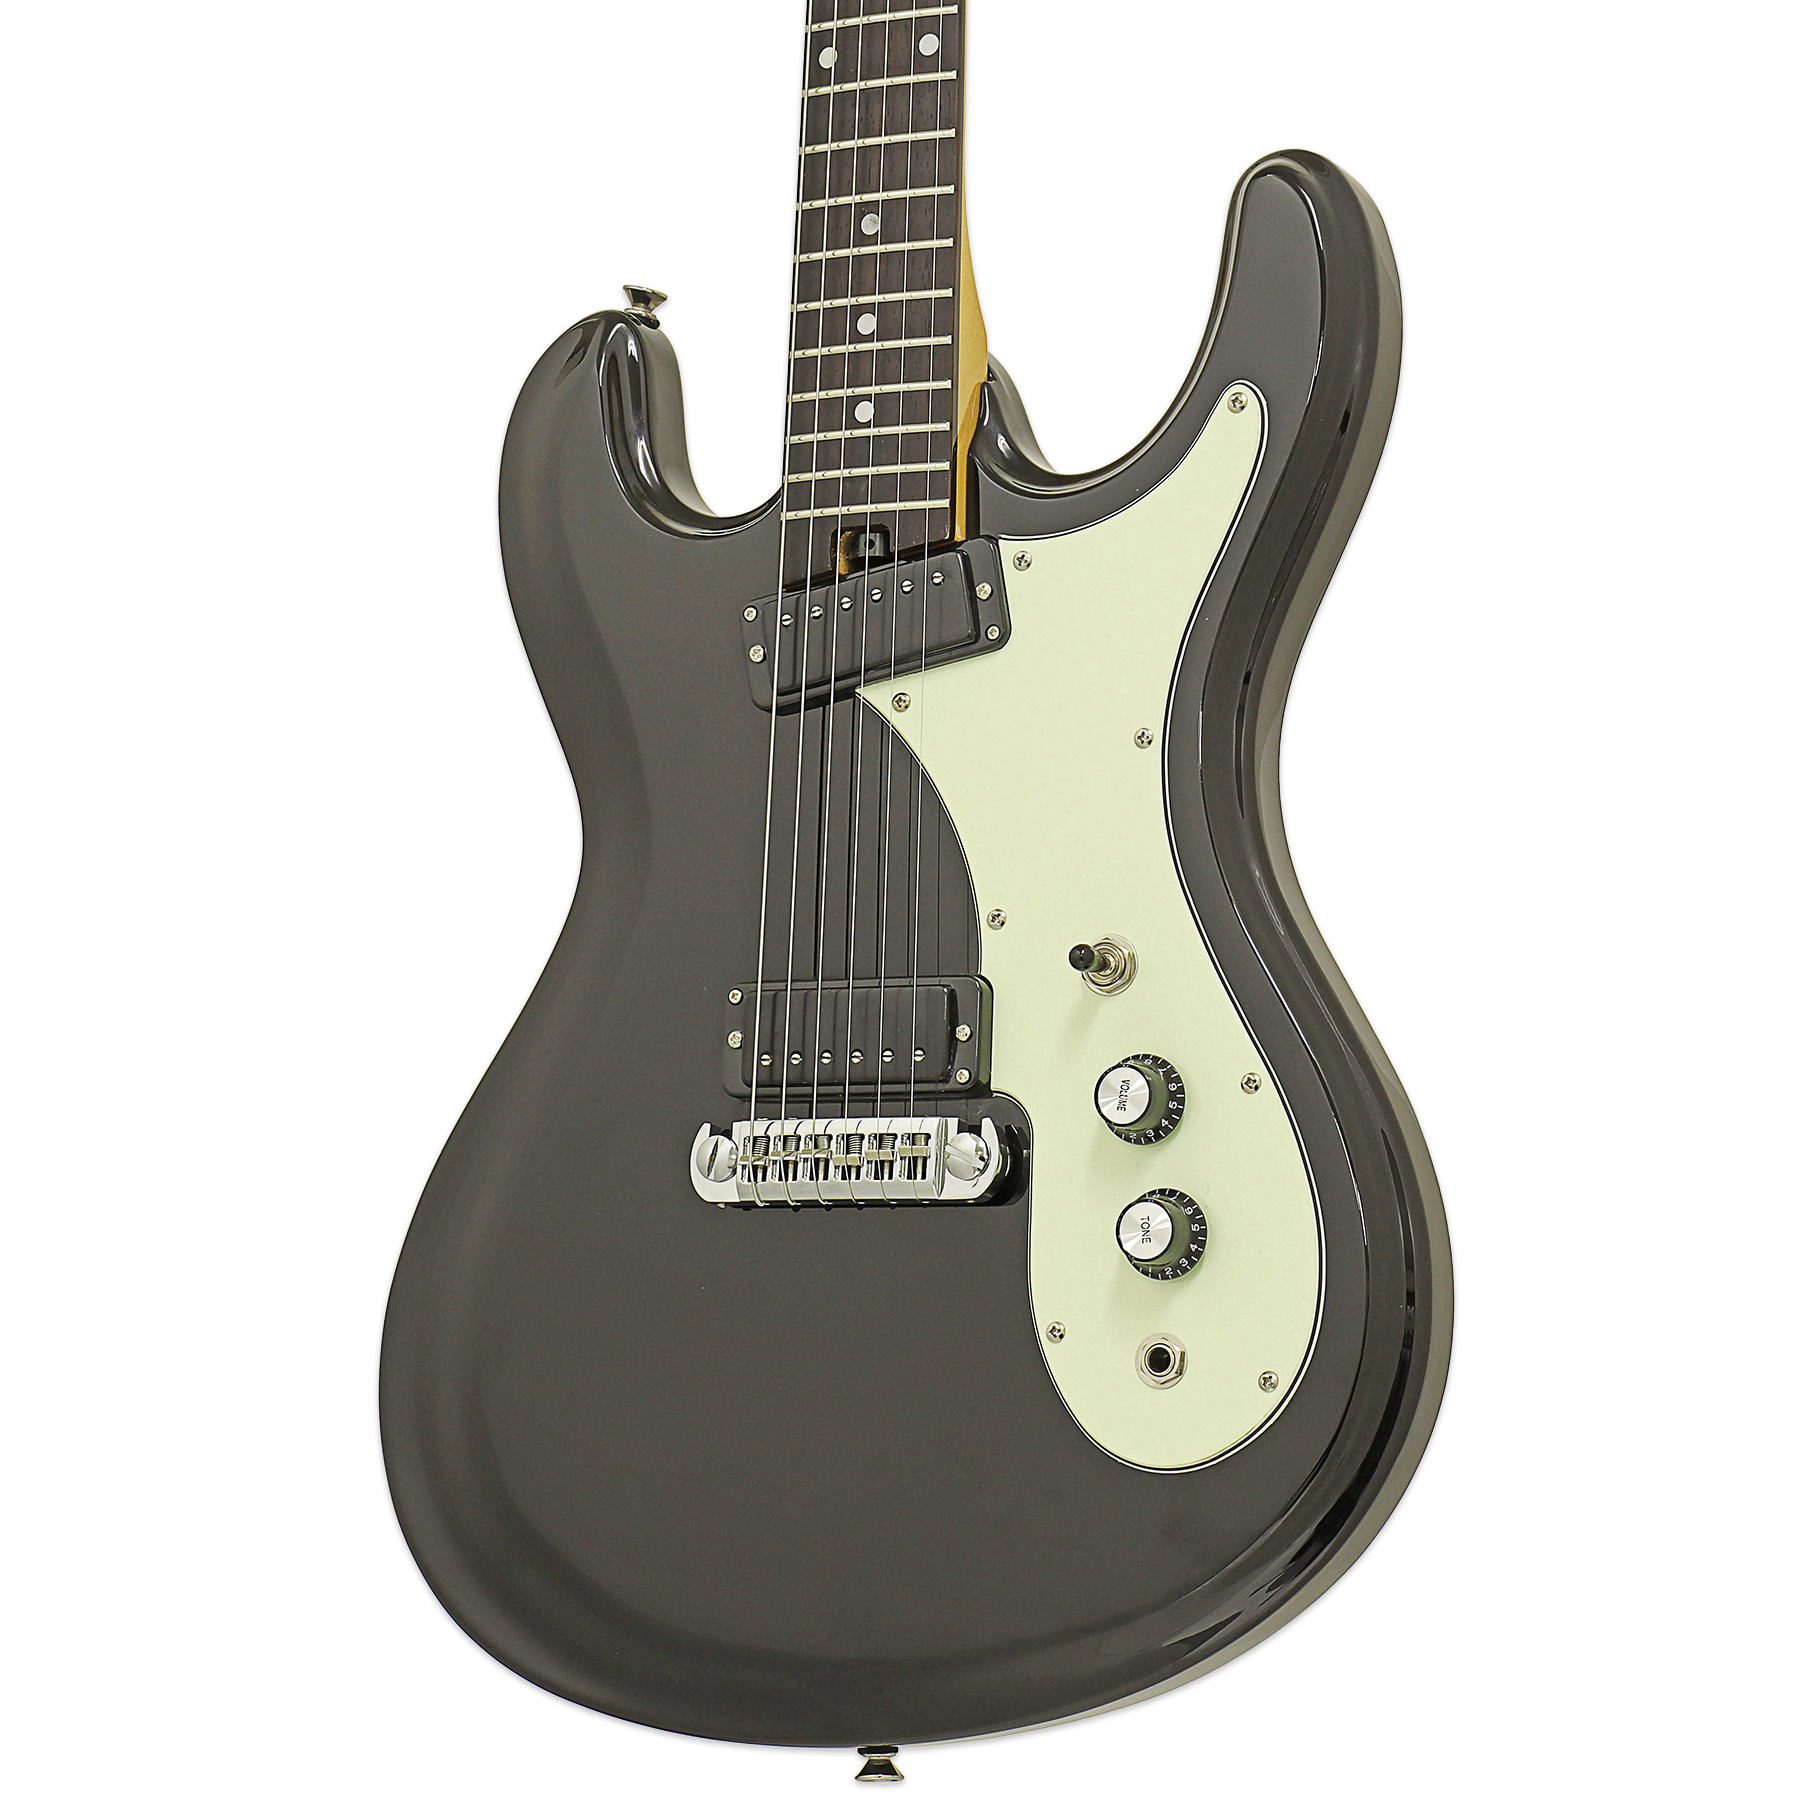 Aria Pro II DM-206, Black - Univox Hi-Flyer Tribute - Retro Classic Series, Awesome Offset Guitar